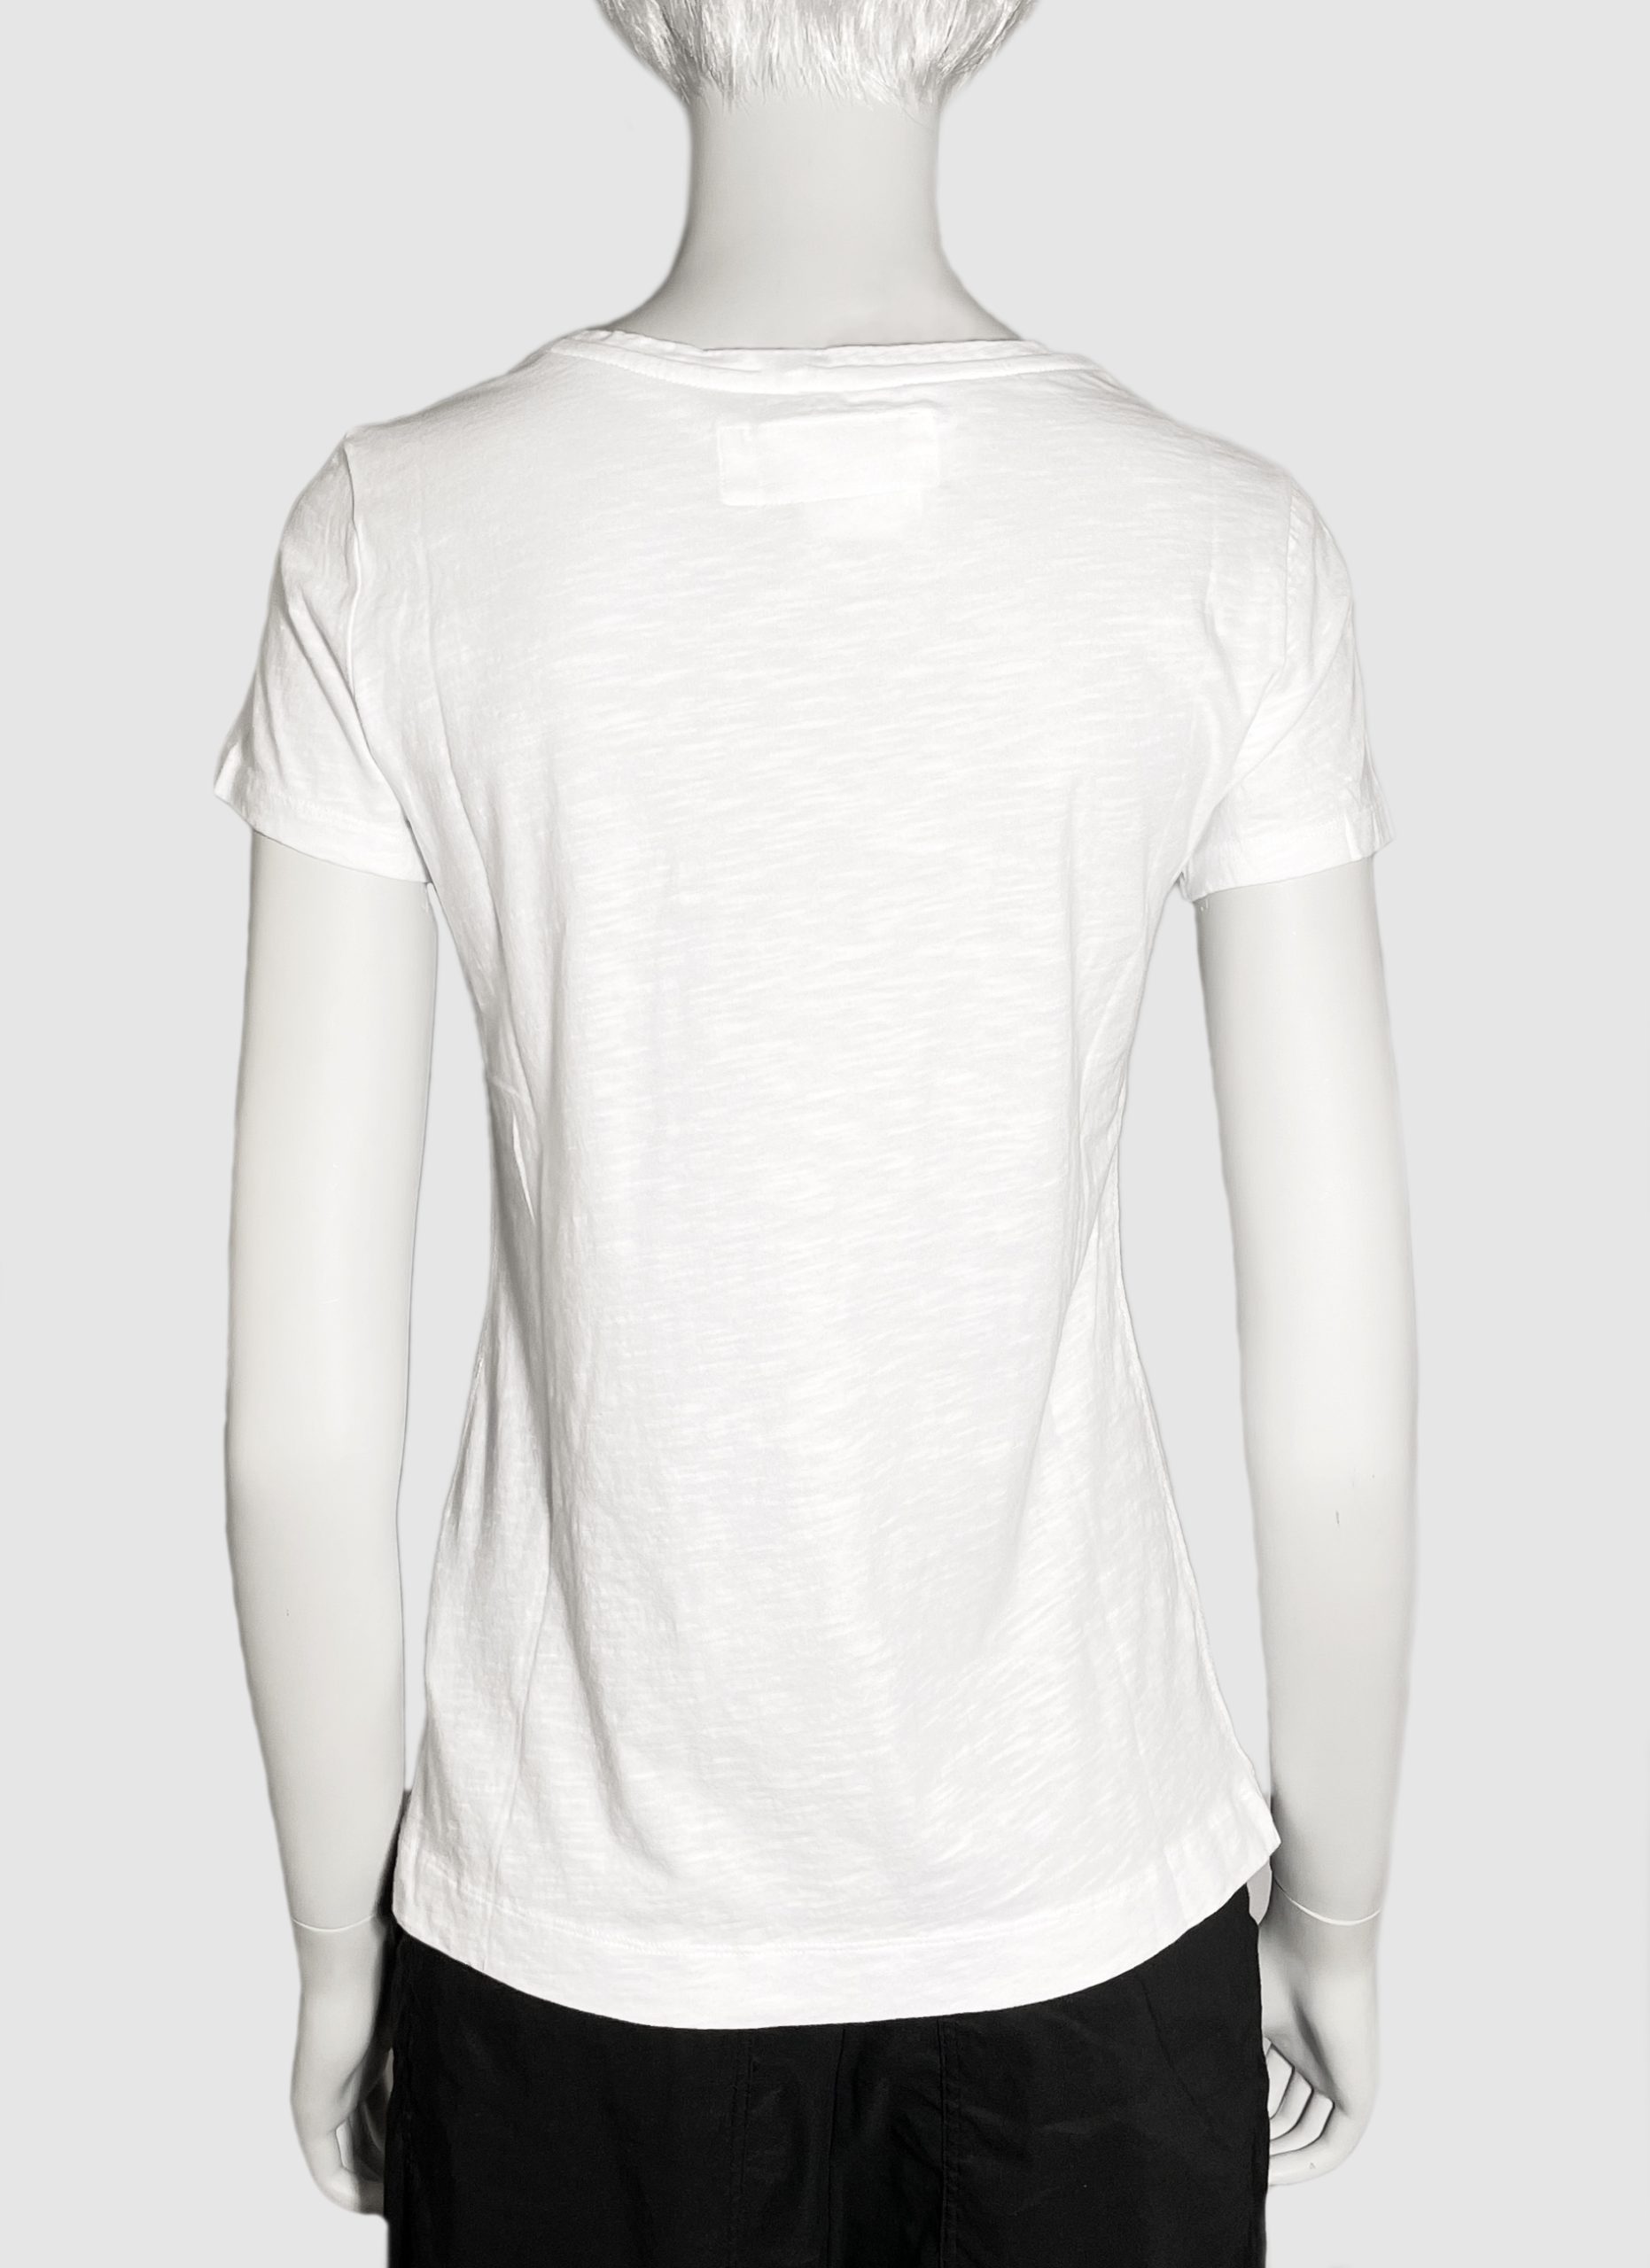 IL LABIRINTO T-shirt bianca o nera